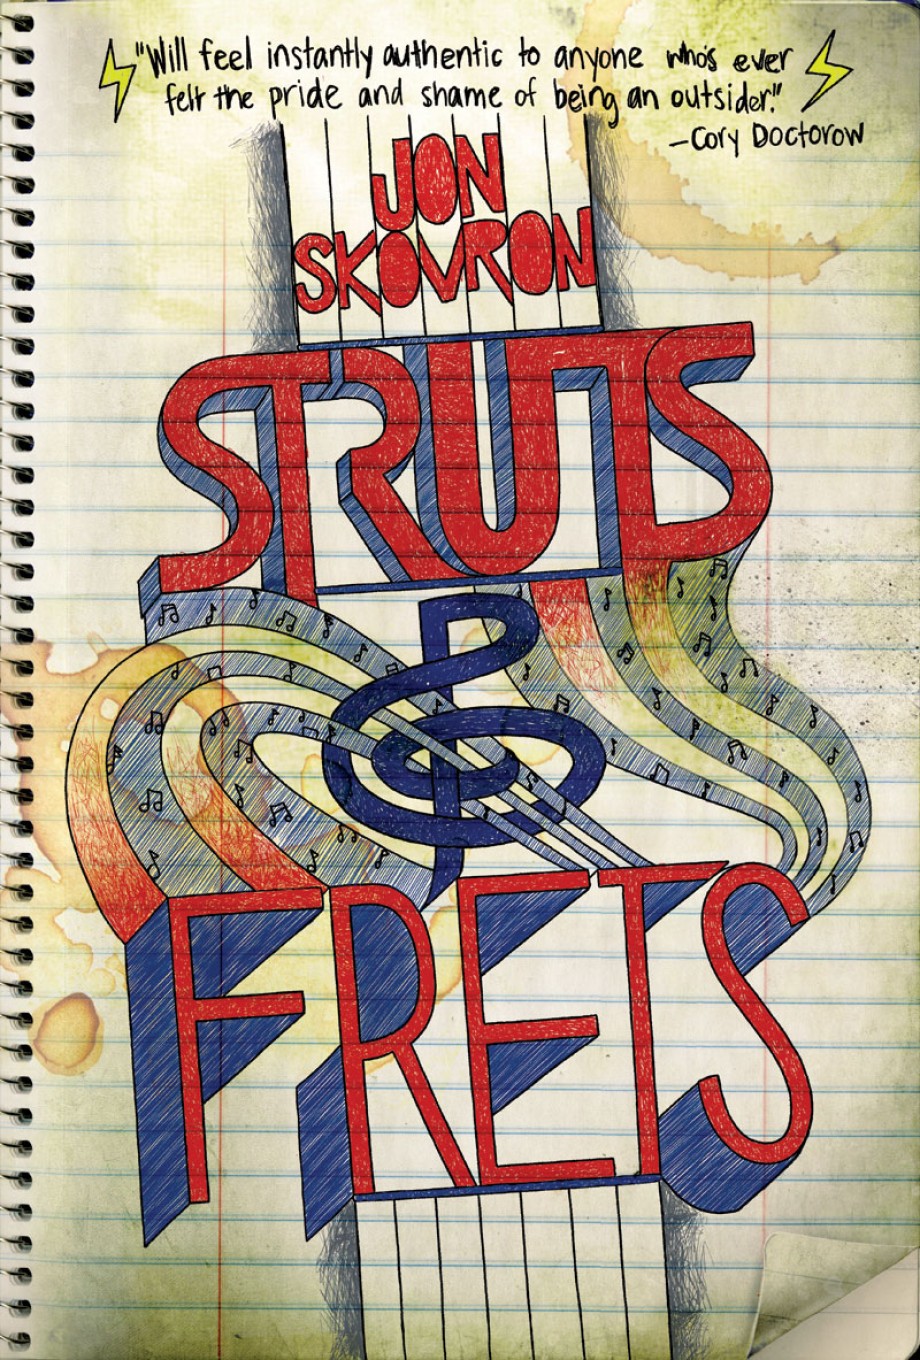 Struts & Frets 